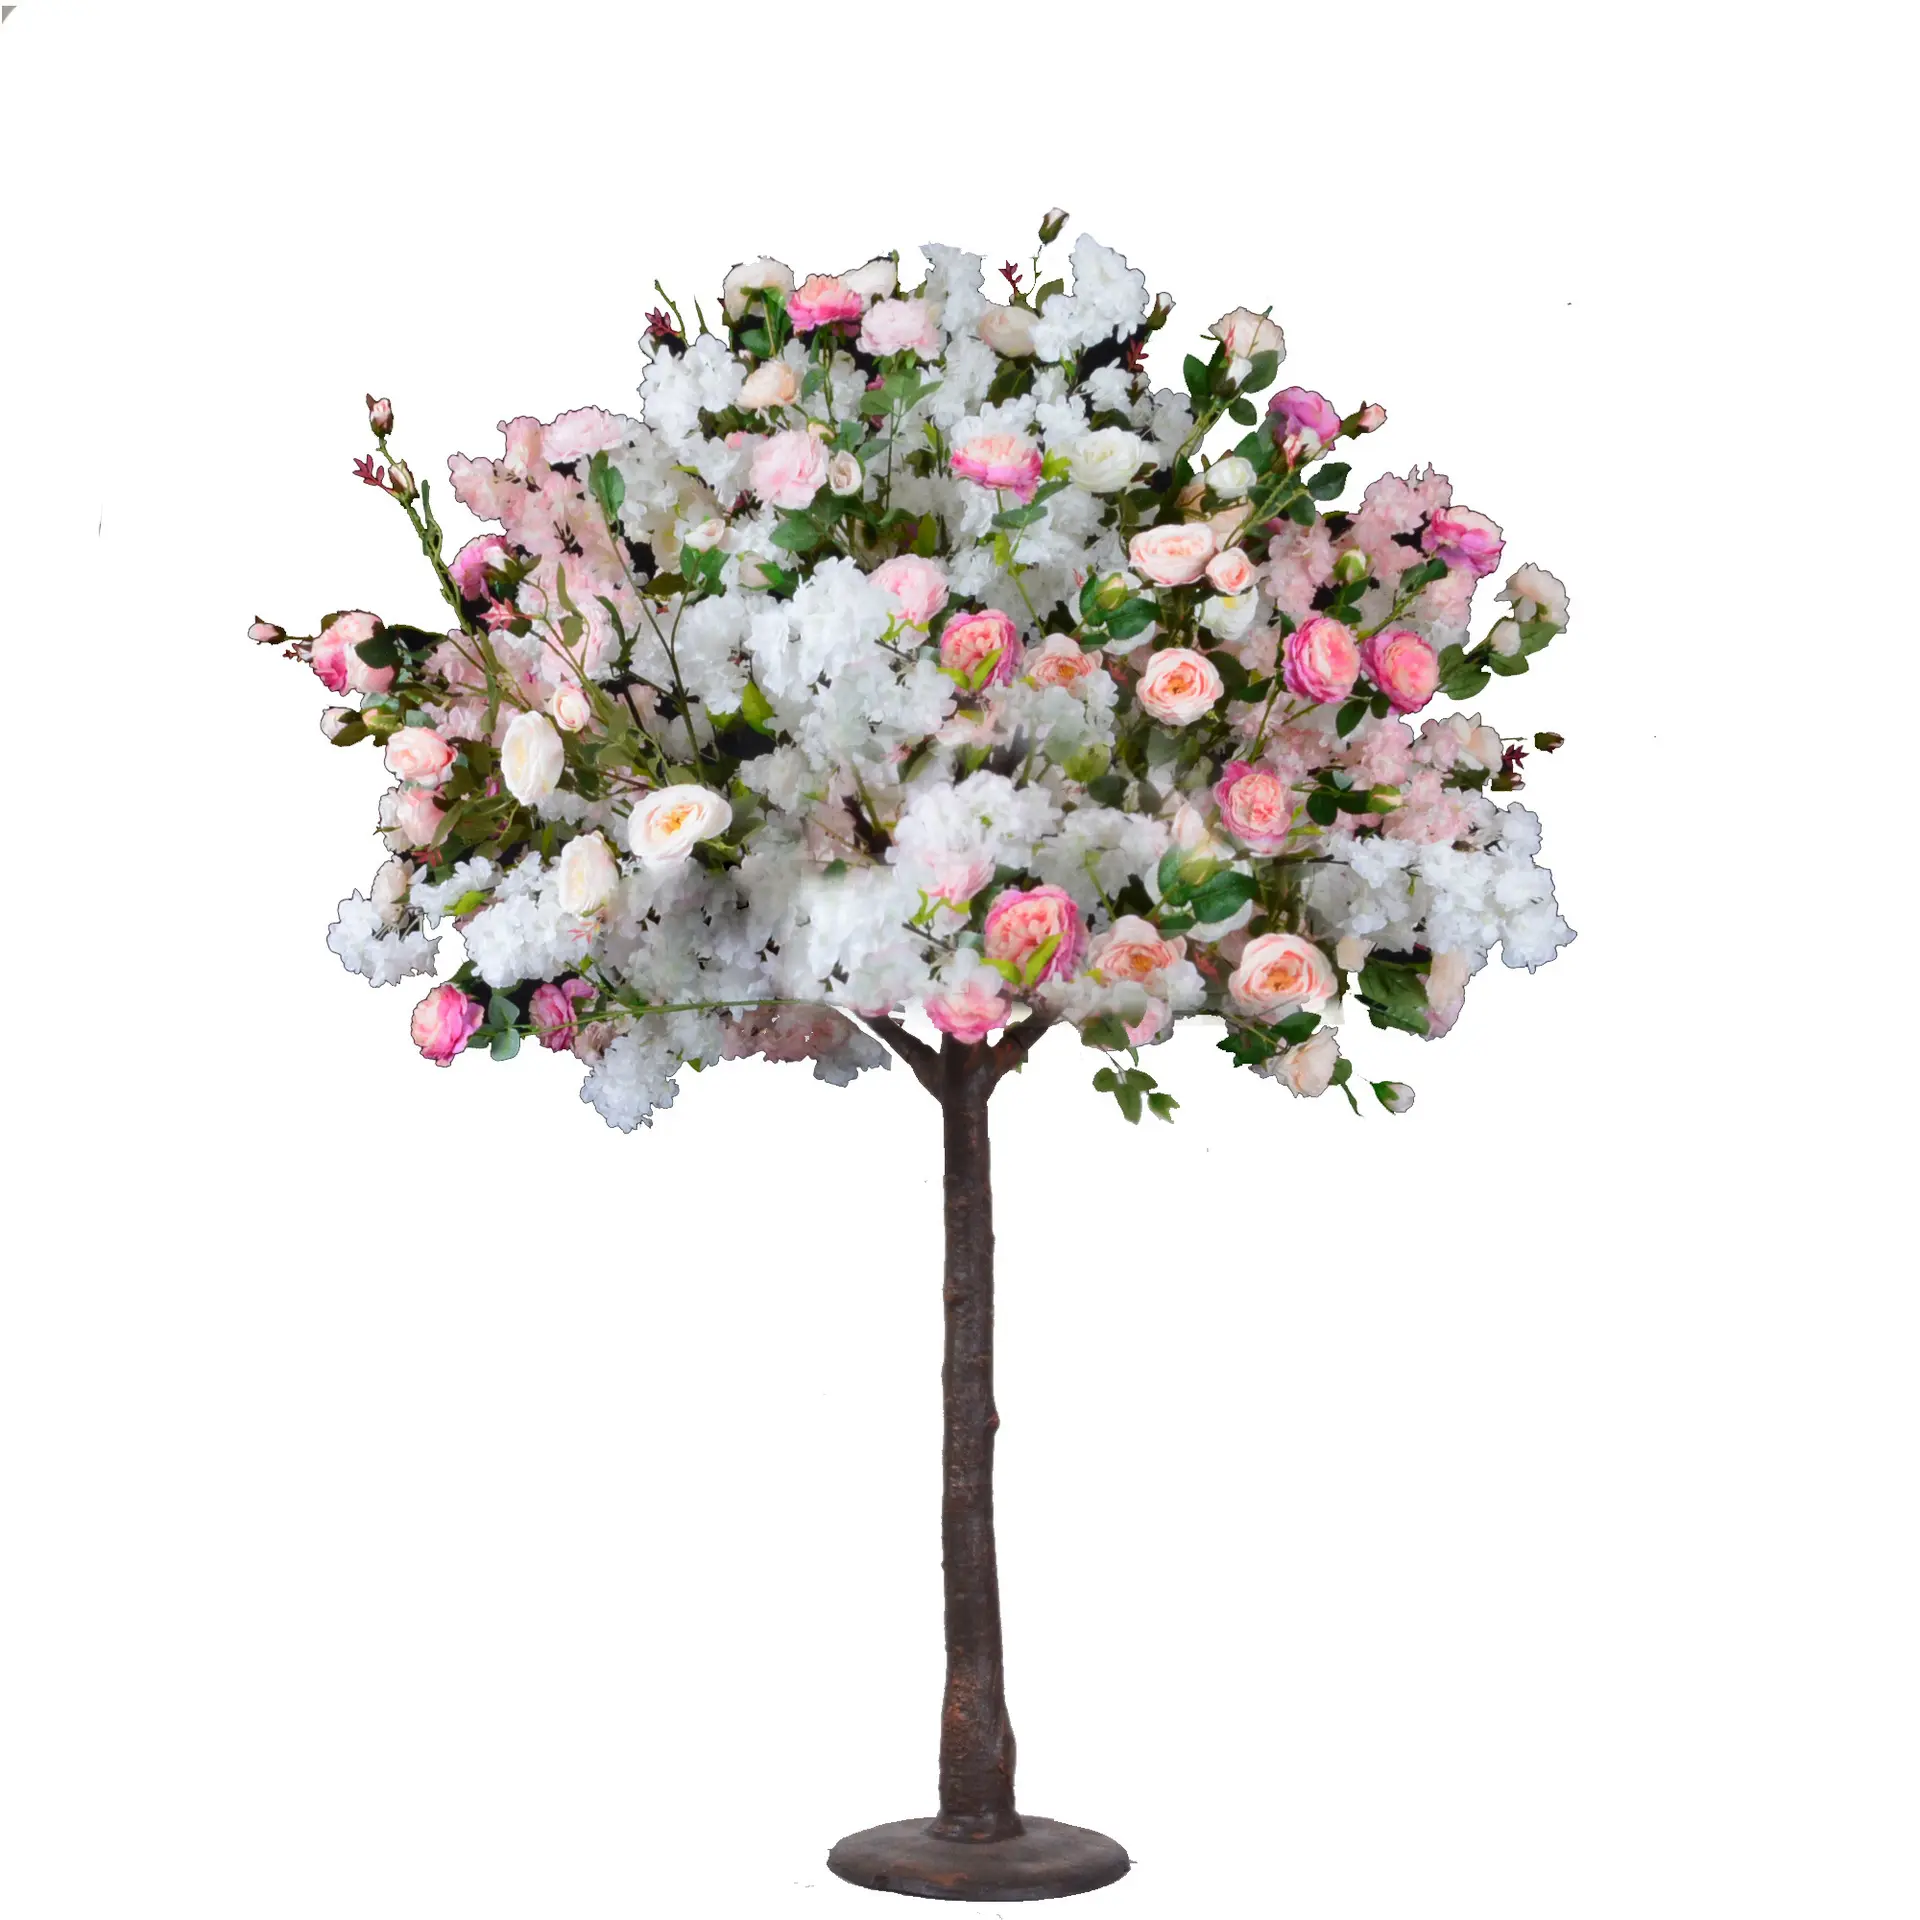 O-X682 مخصصة حجم لوازم ديكورات زفاف للمنزل صغيرة بوكيه ورد صناعي شجرة الأبيض الوردي الوجه شجرة الورود الاصطناعي ديكور داخلي